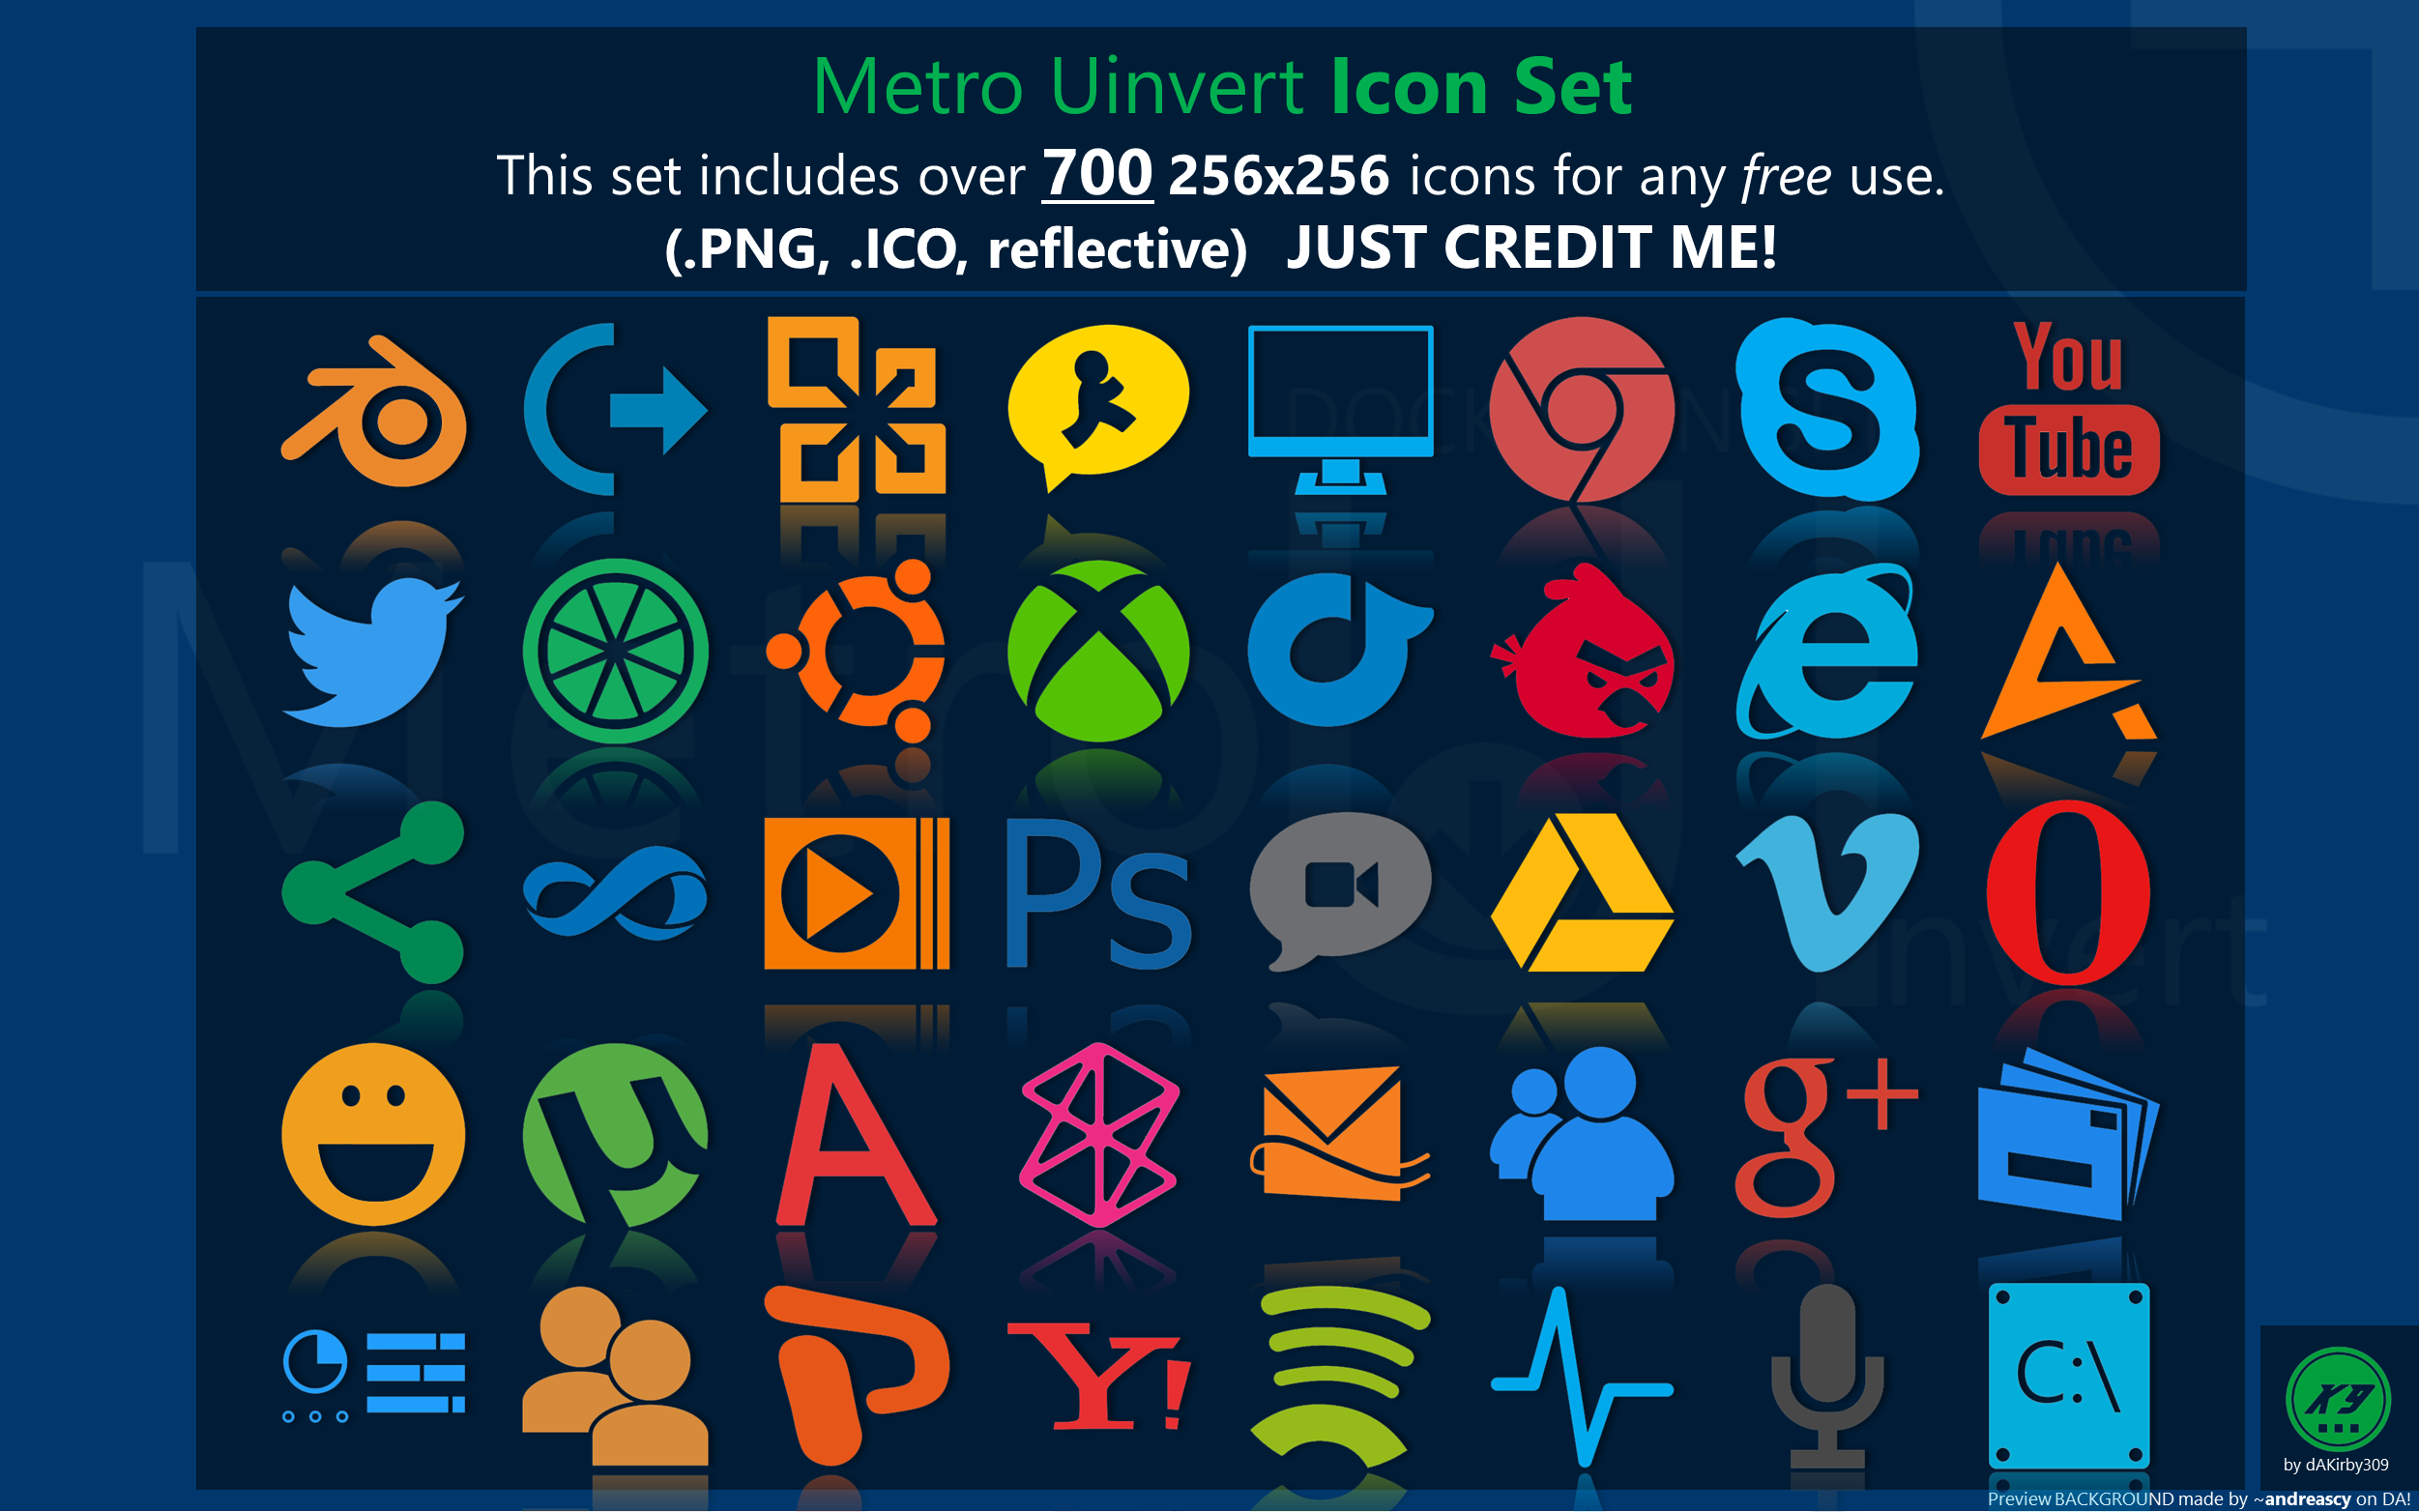 20 Free High-Quality Flat Design Icon Sets